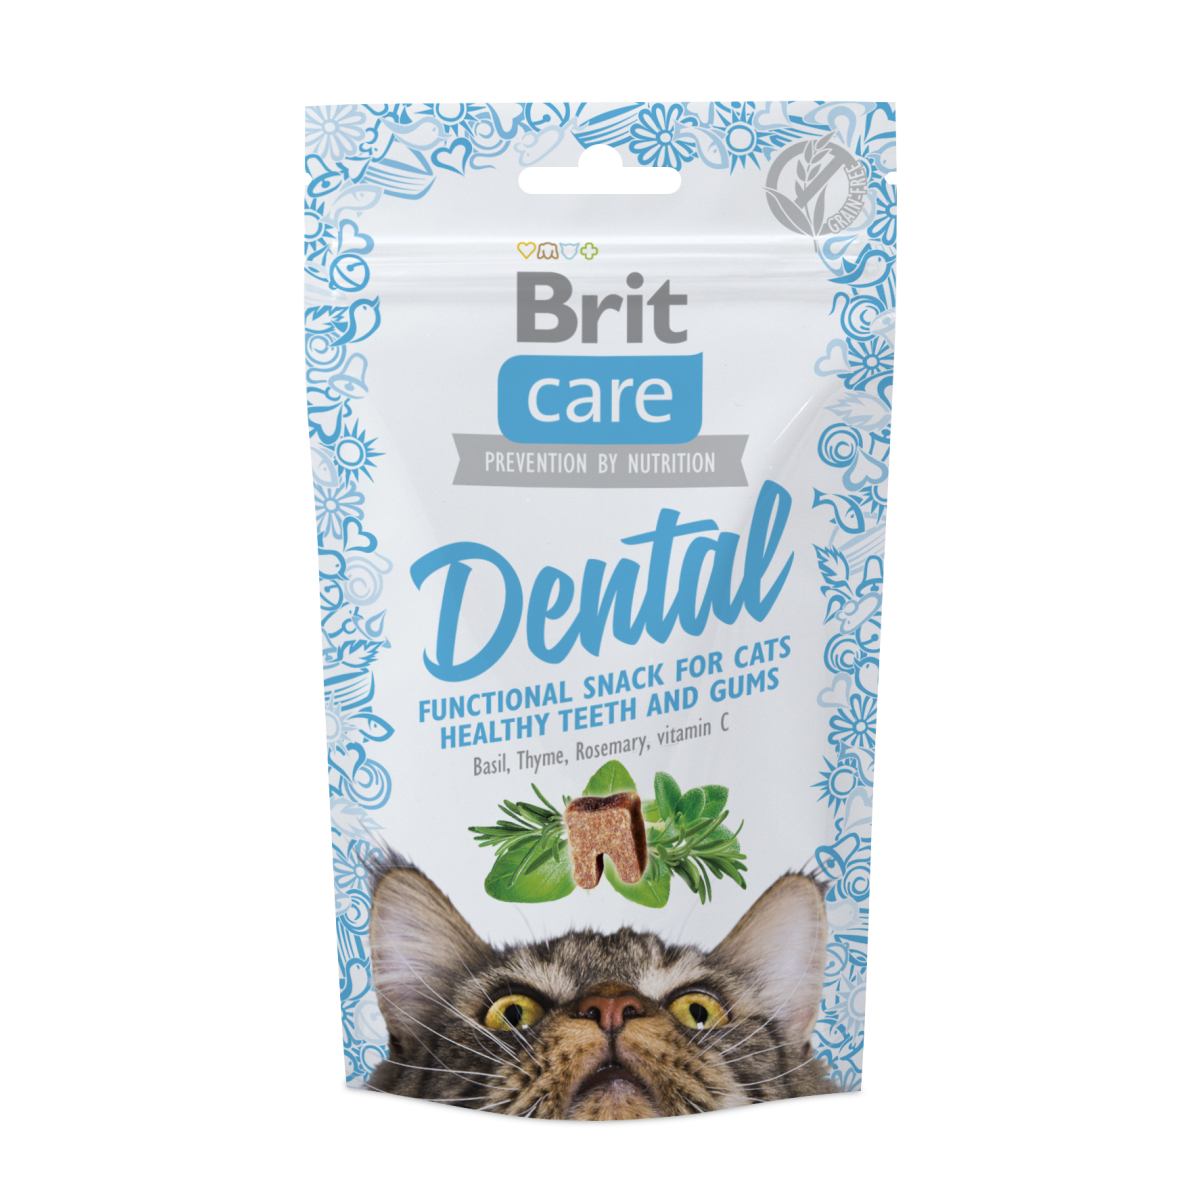 Лакомство для кошек Brit Care Functional Snack Dental 50 г, для зубов